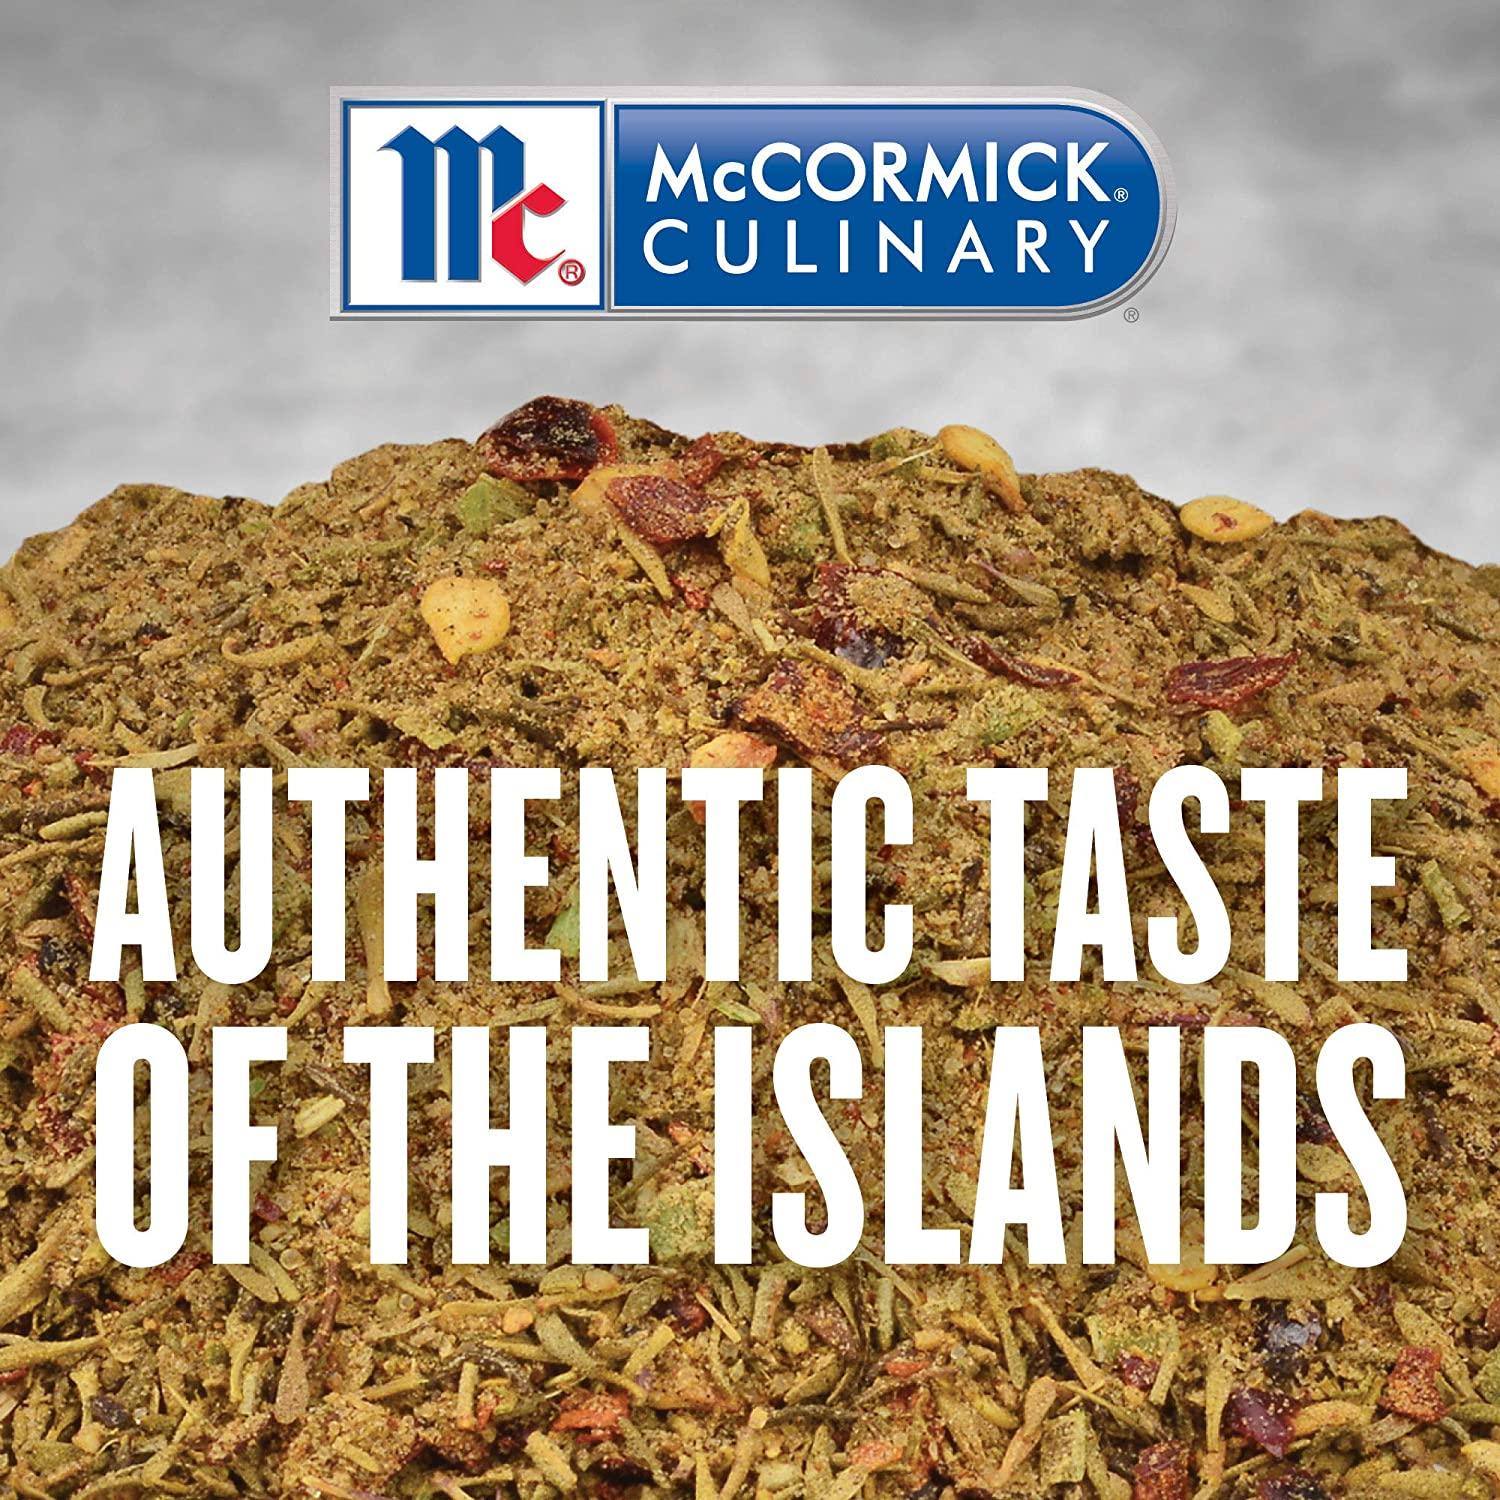 McCormick Culinary Cajun Seasoning, 18 oz Mixed Spices & Seasonings